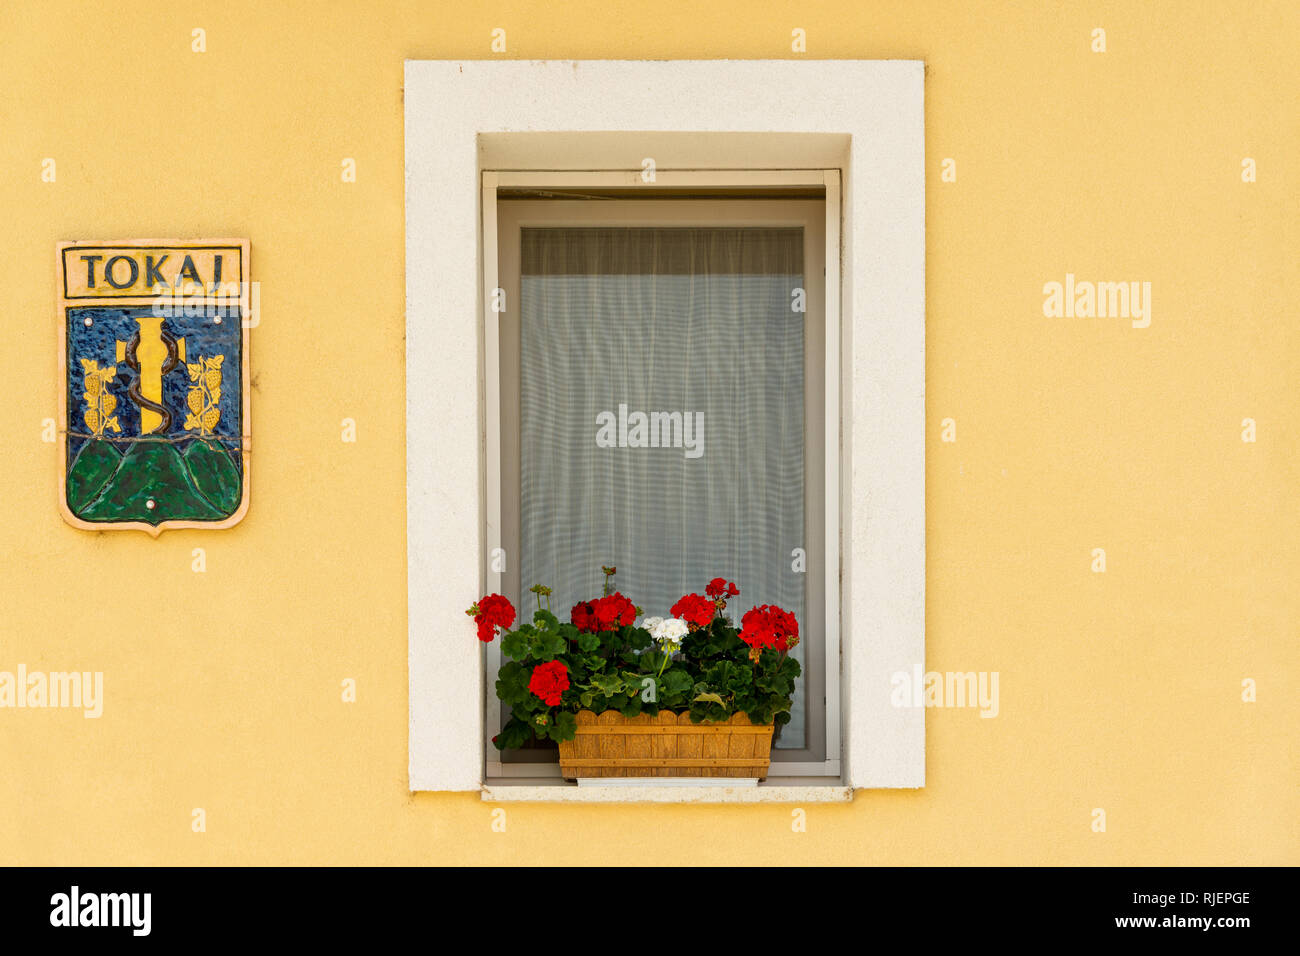 Window and coat of arms on the house in Tokaj town center, Tokaj wine region, Hungary Stock Photo